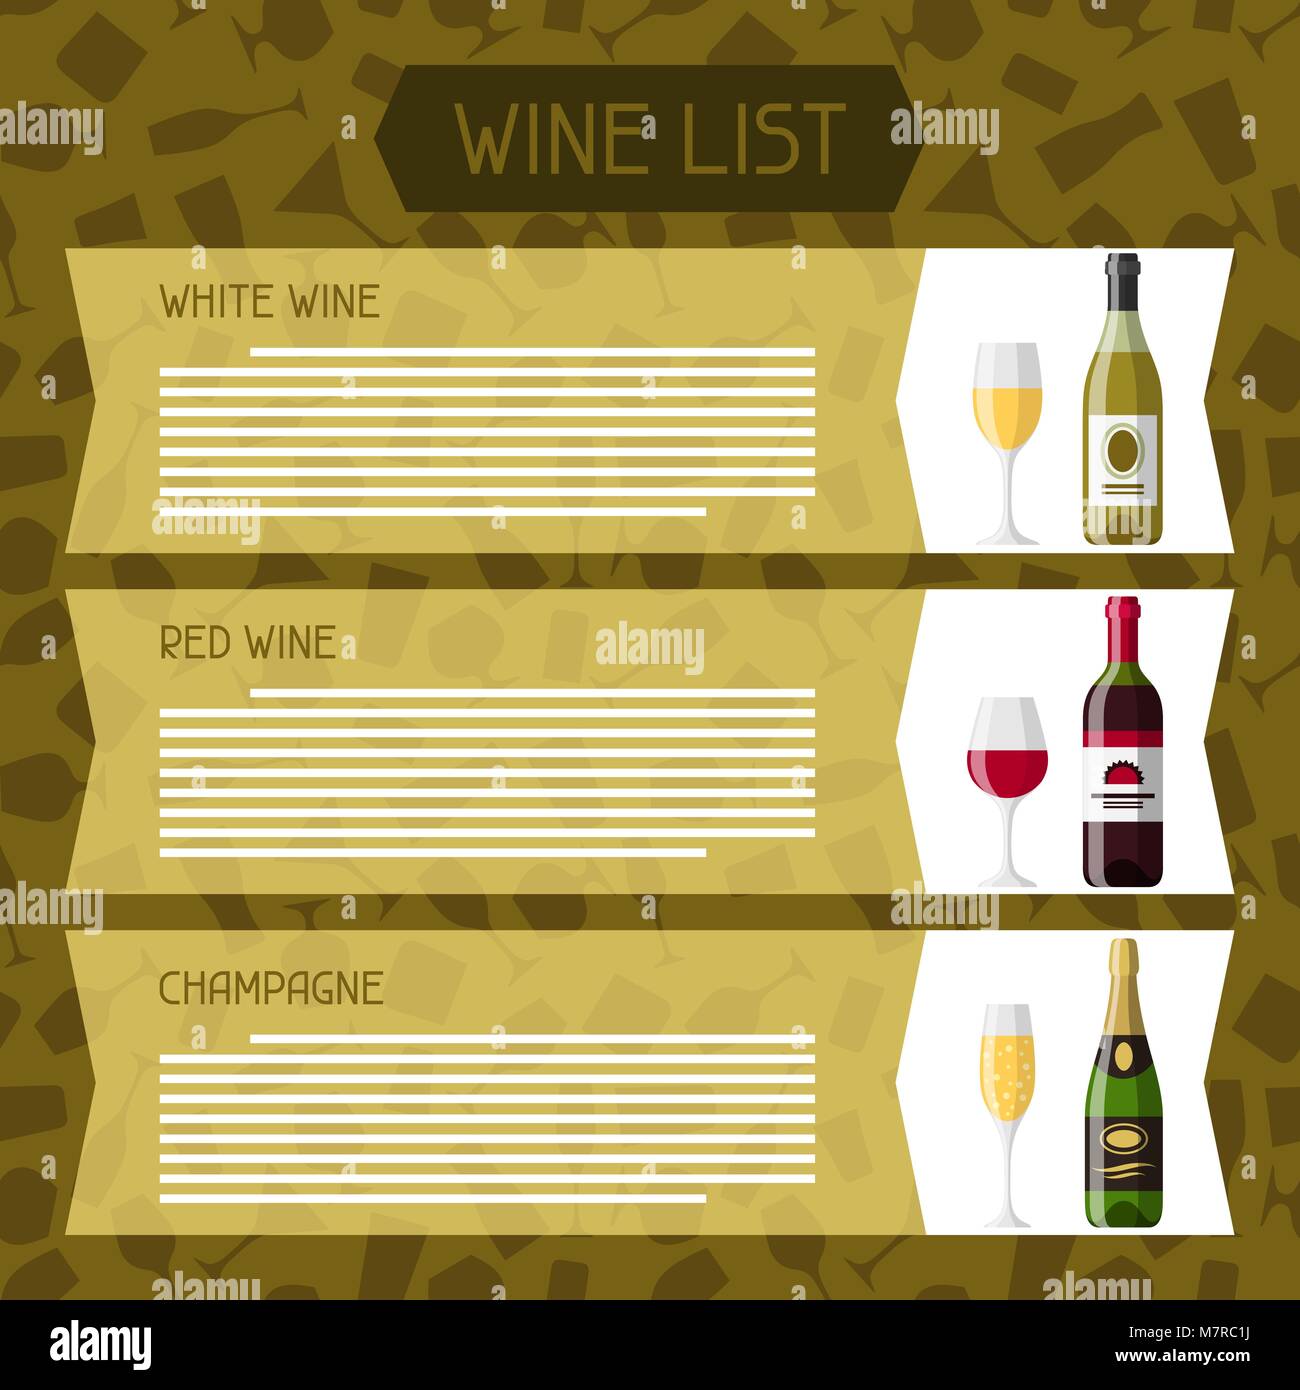 Alcohol drinks menu or wine list. Bottles, glasses for restaurants and bars Stock Vector